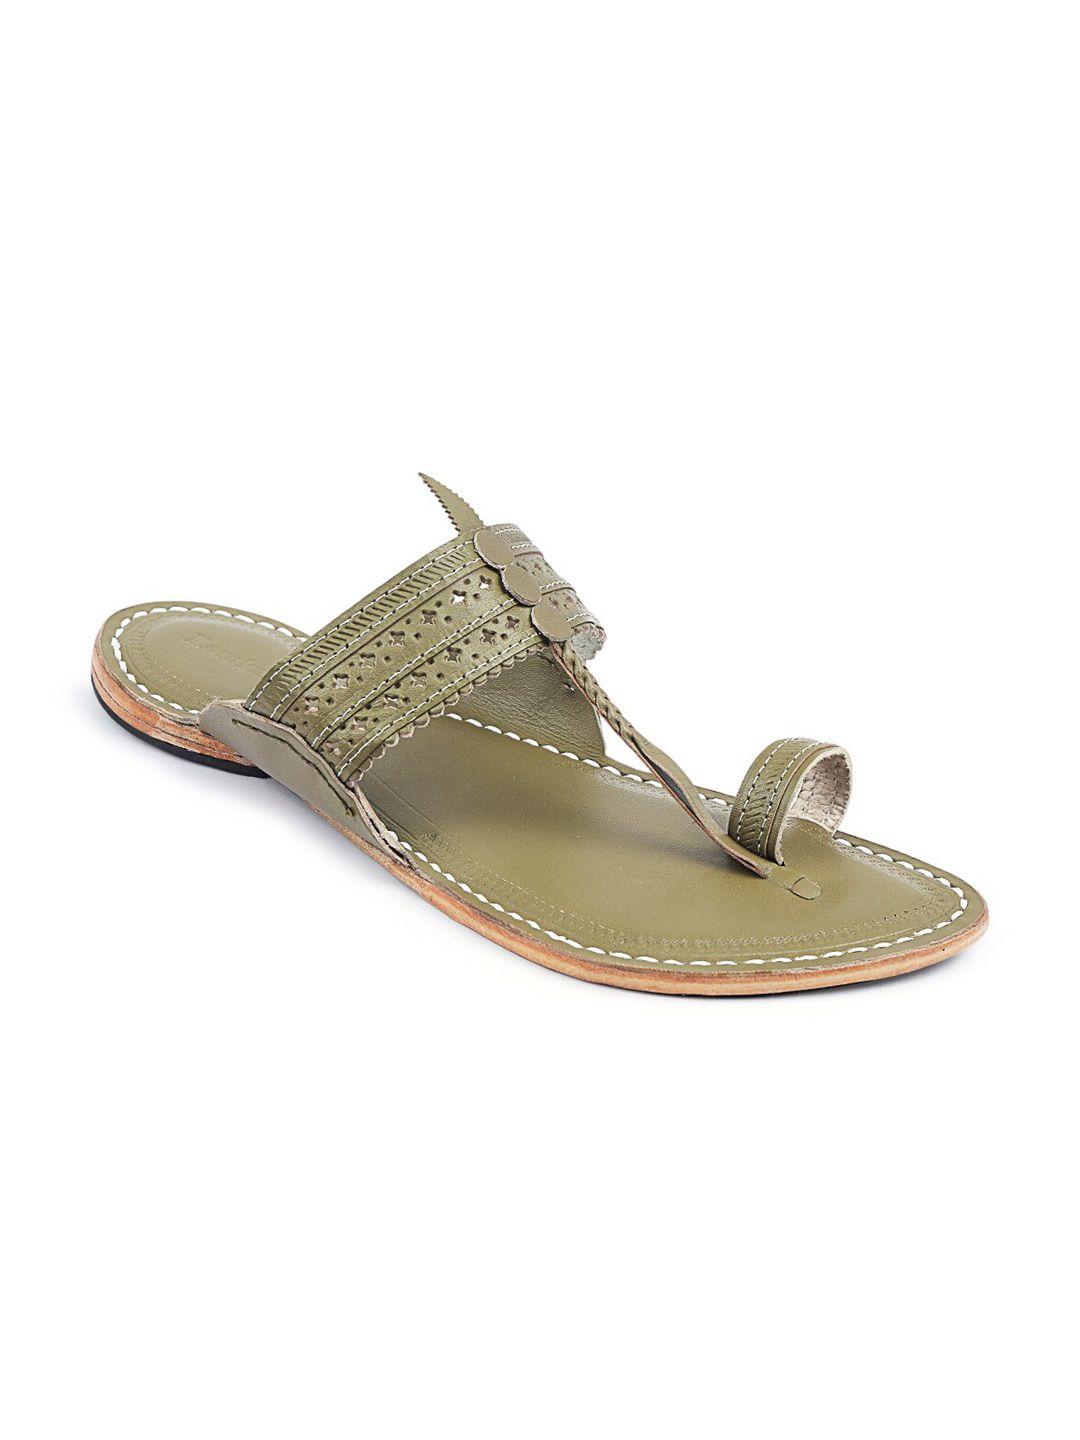 korakari men textured ethnic leather comfort sandals